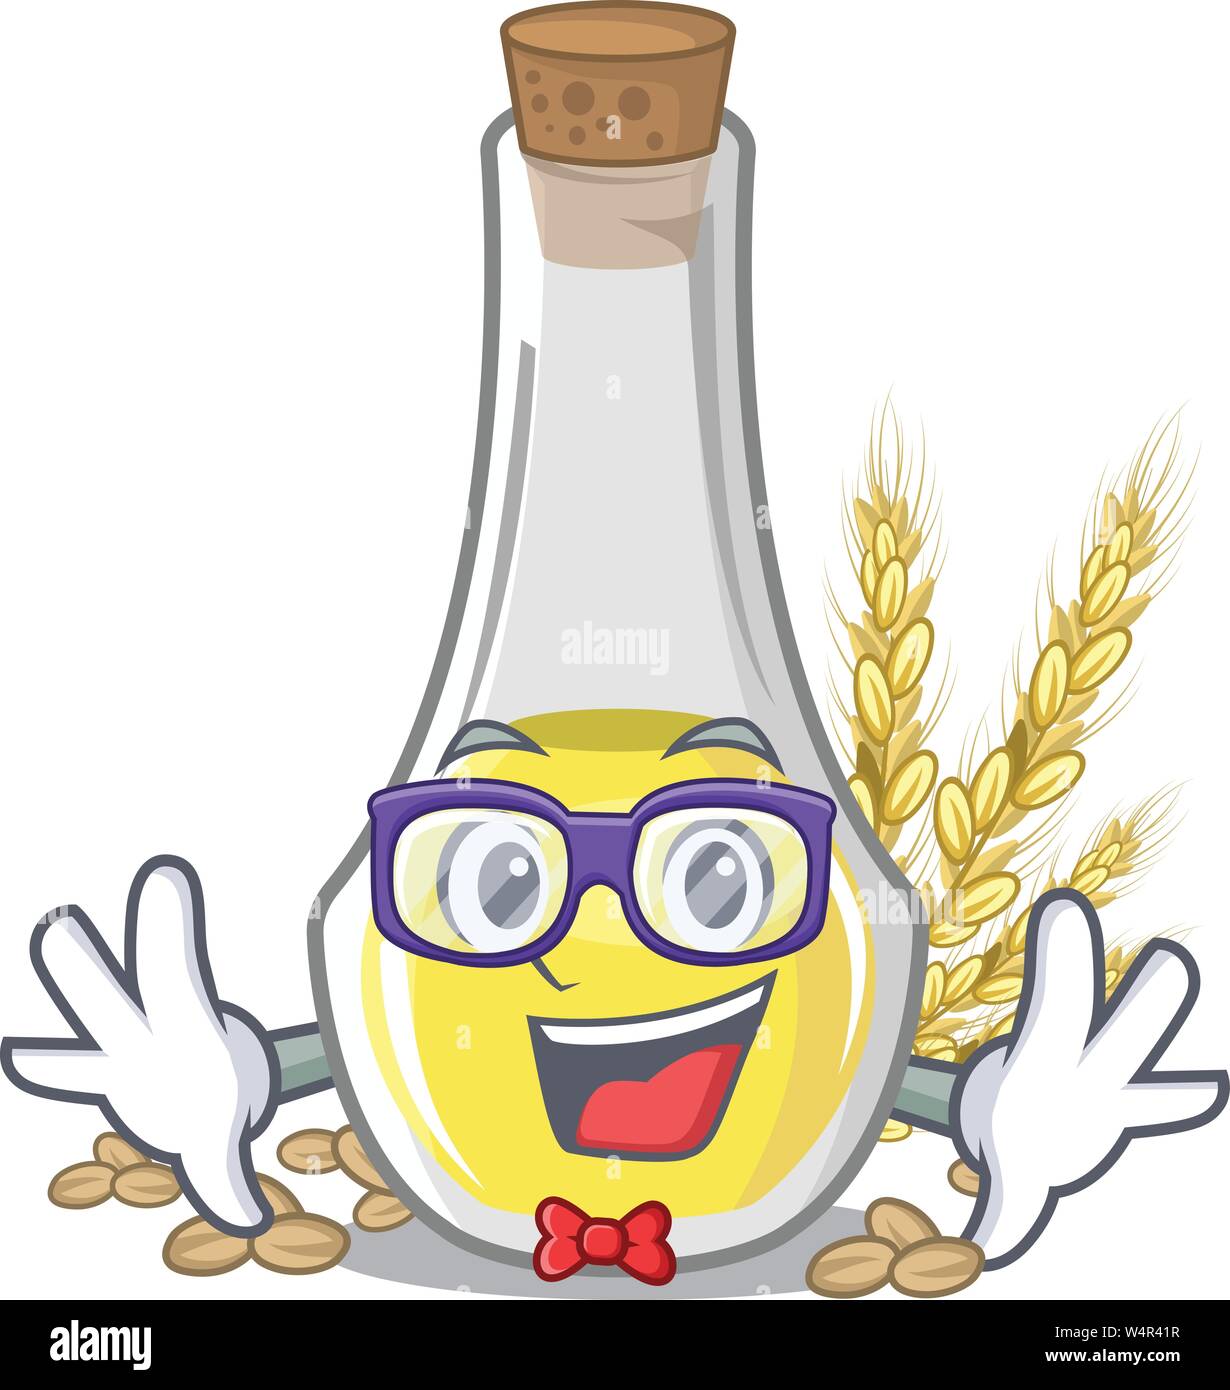 Geek wheat germ oil the mascot shape vector illustration Stock Vector